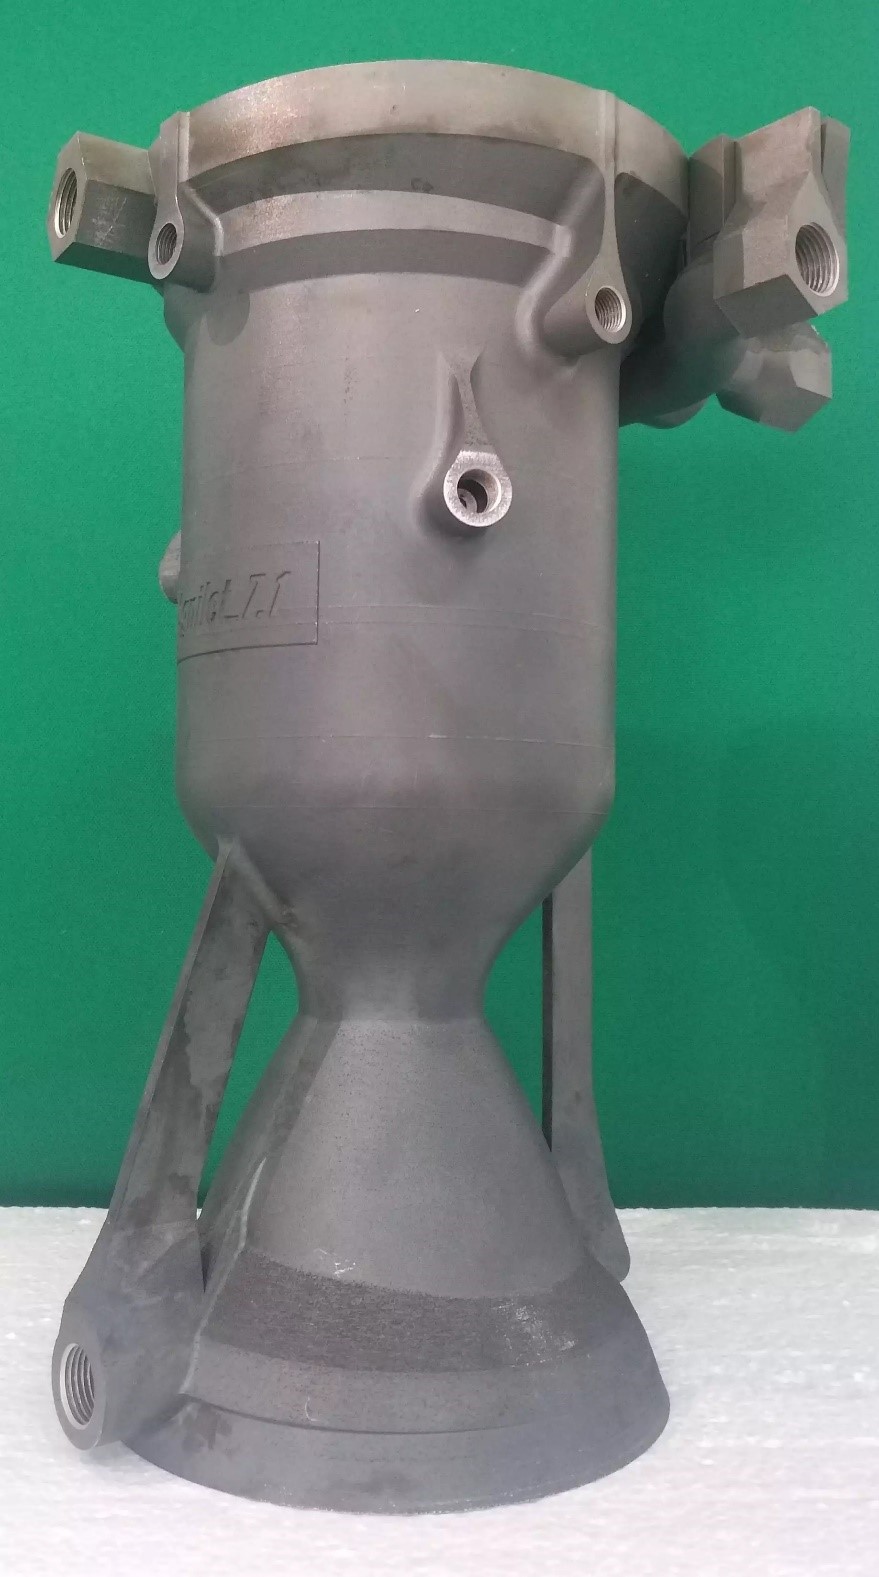 3D Printed Rocket Engine by Agnikul